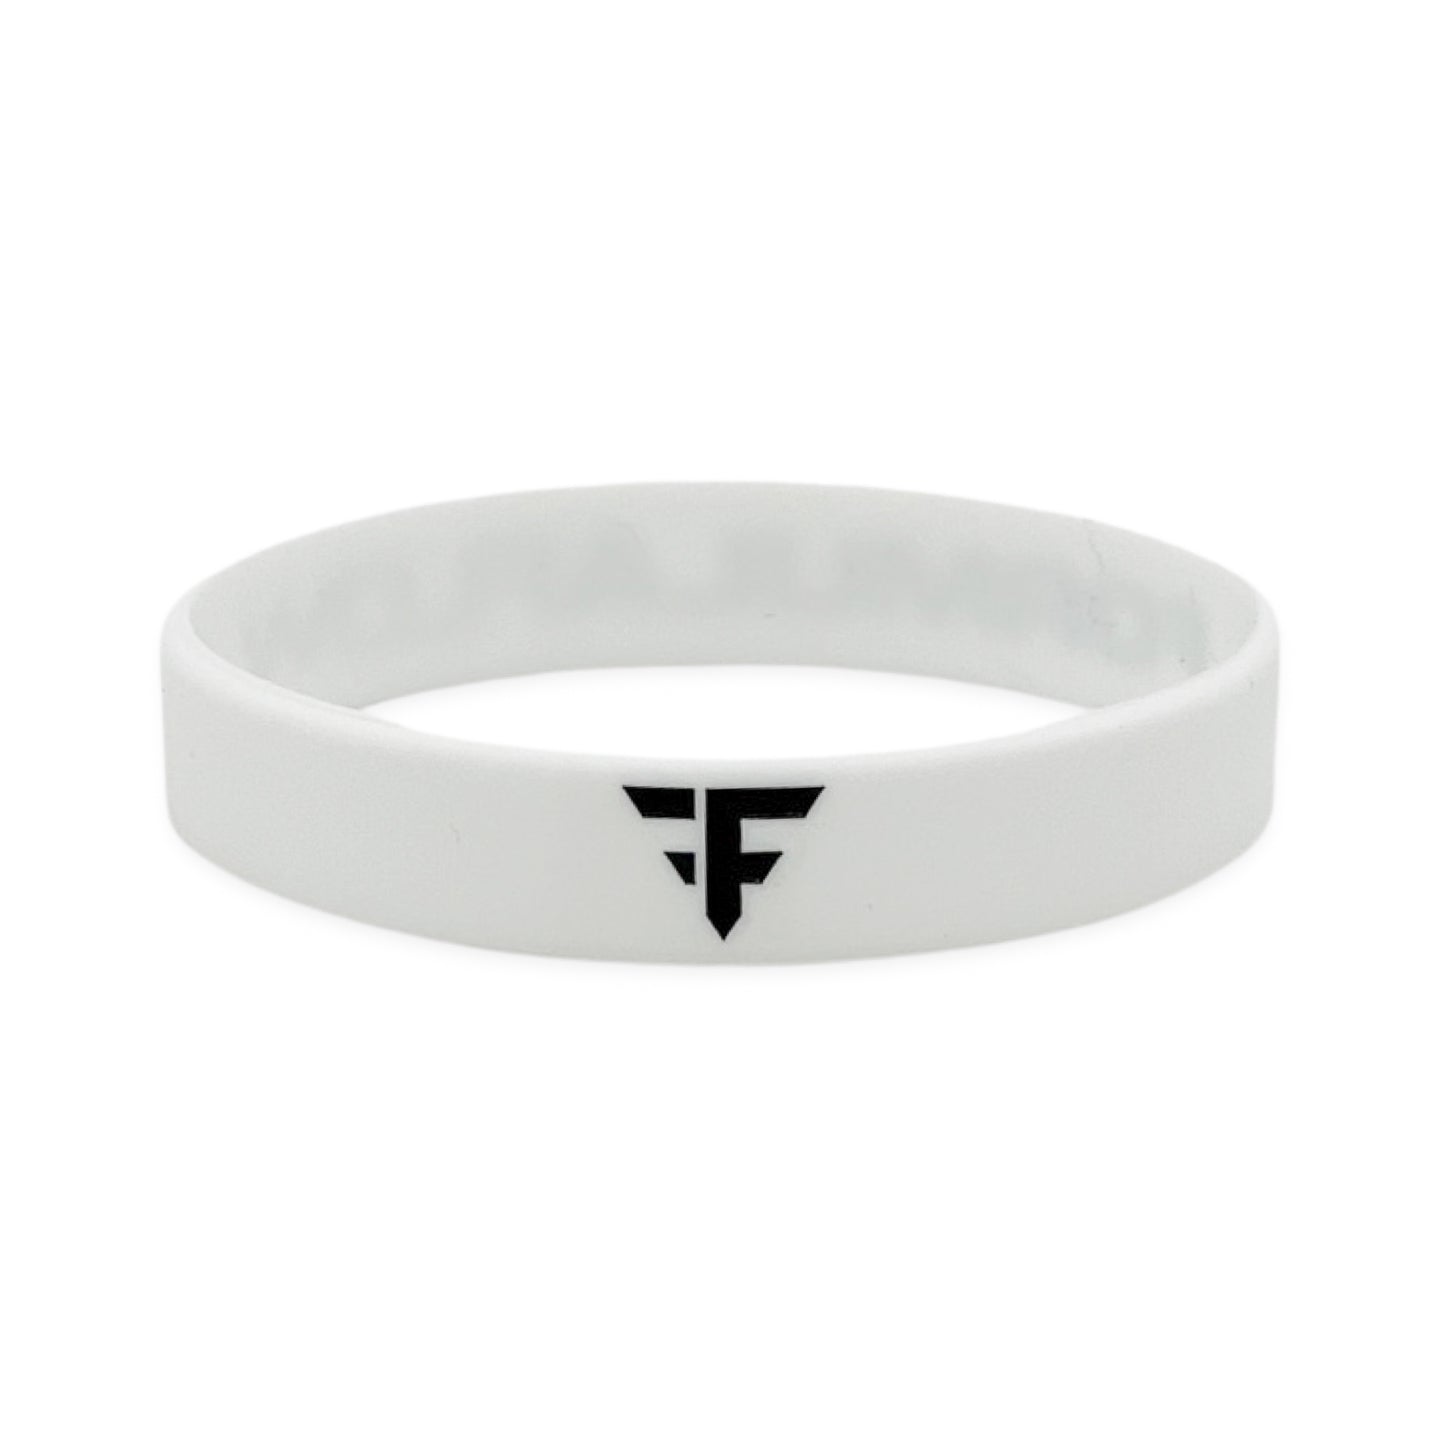 Formulaflow Wristband